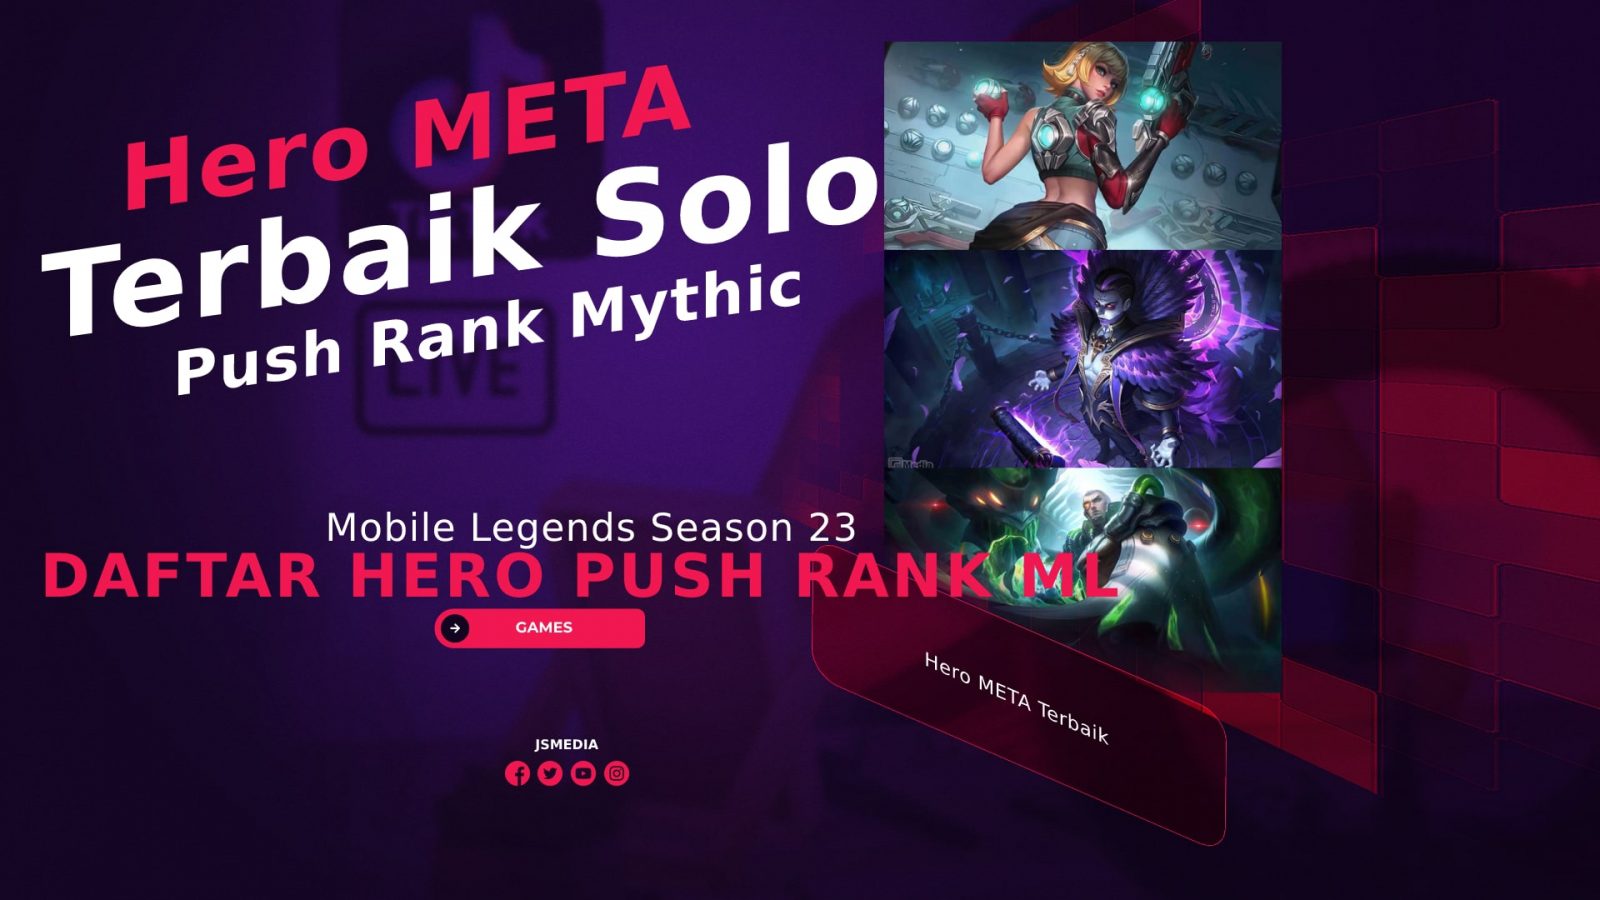 Hero META Terbaik Solo Push Rank Mythic Mobile Legends Season 23